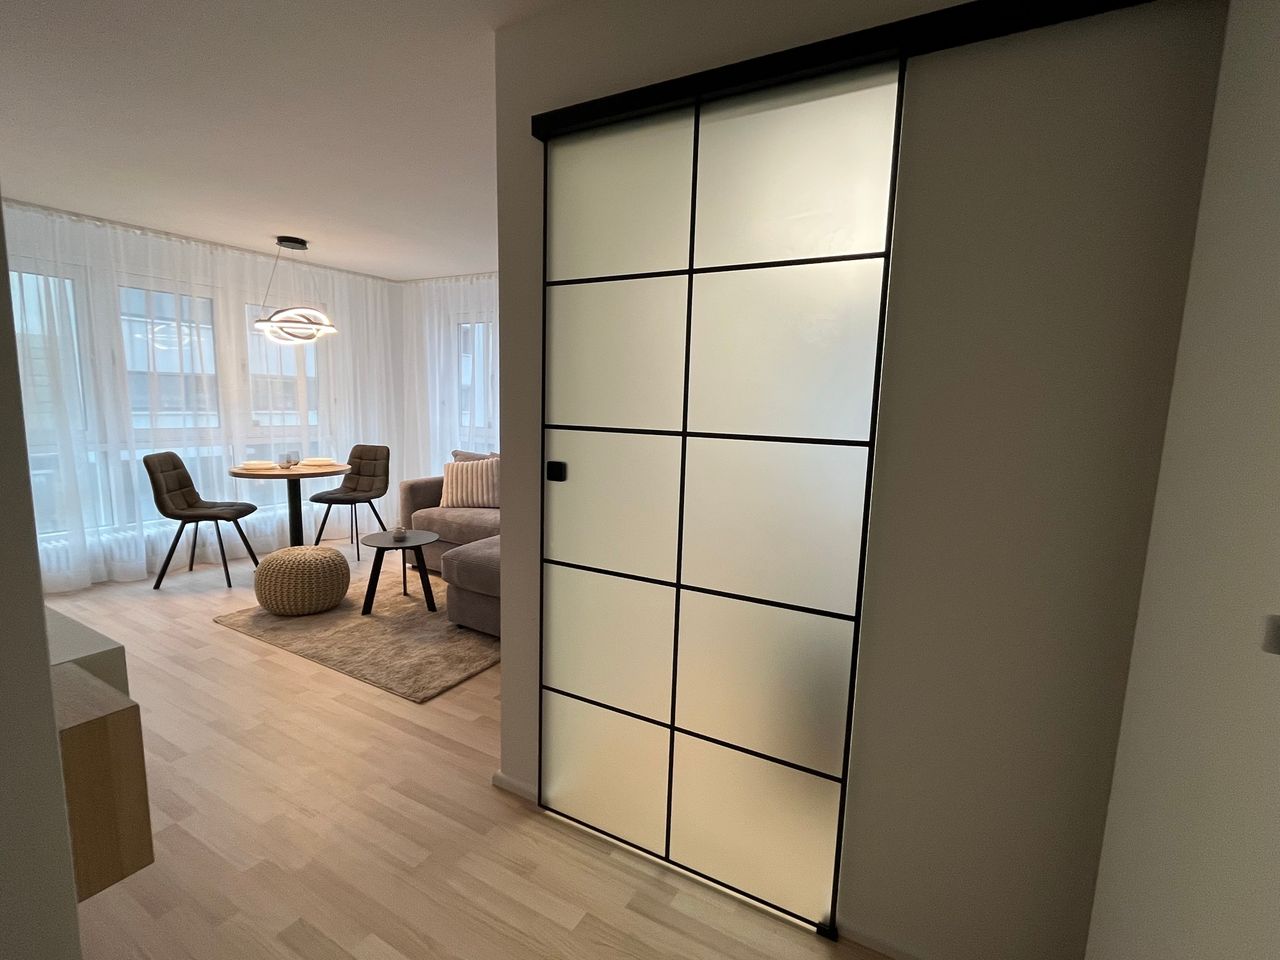 Top renovated 2 room apartment in Stuttgart city center